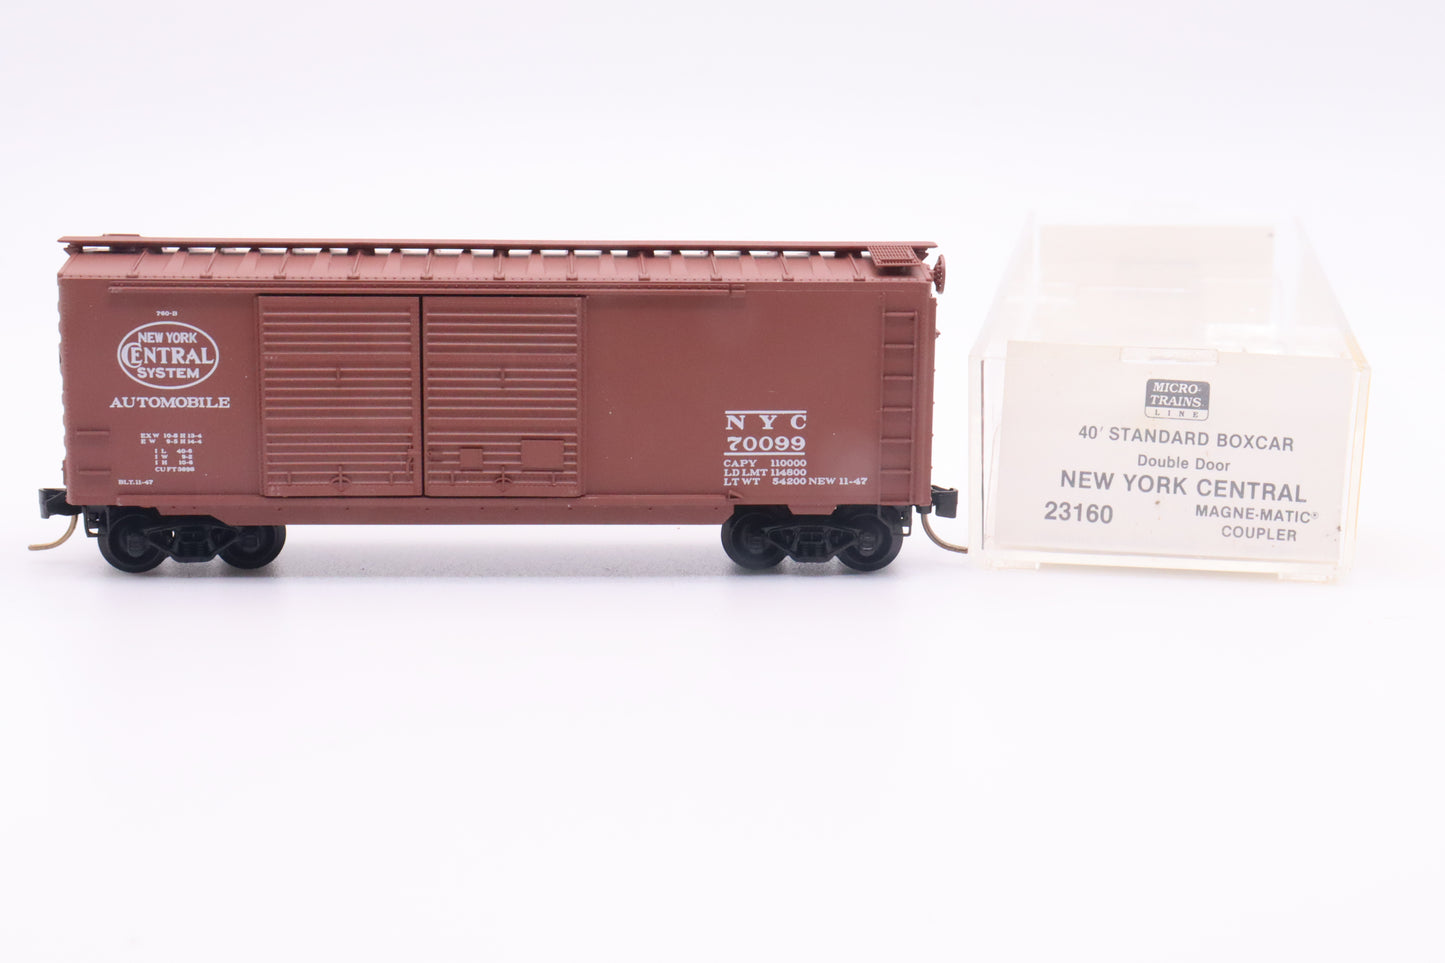 MTL-23160 - 40' Standard Box Car, Double Door - New York Central - NYC-70099